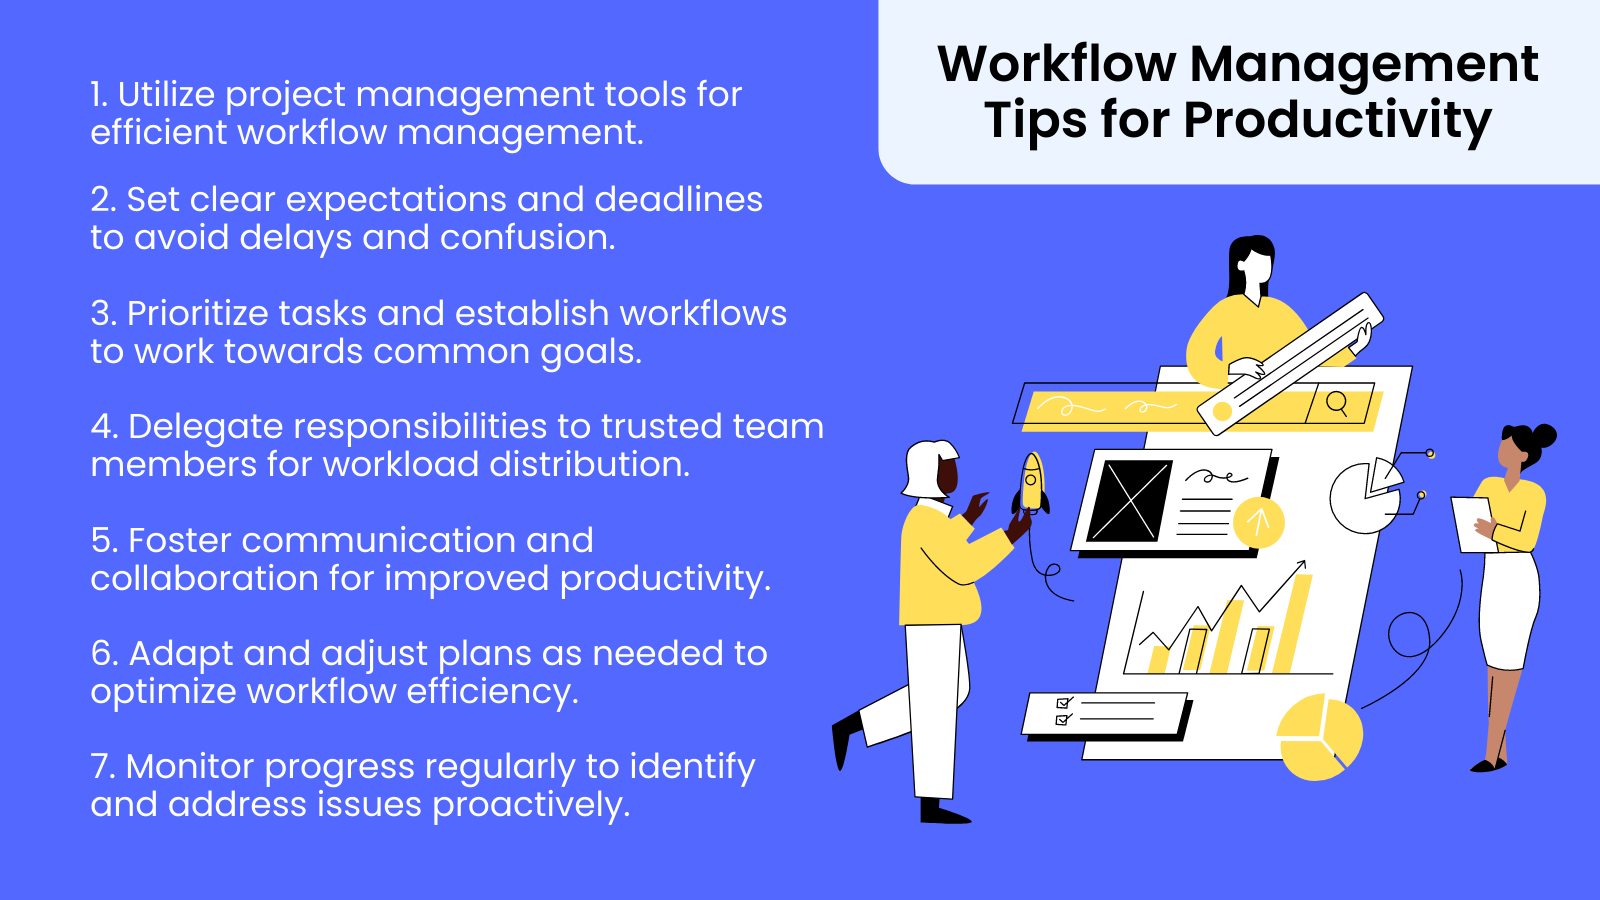 Workflow management tips